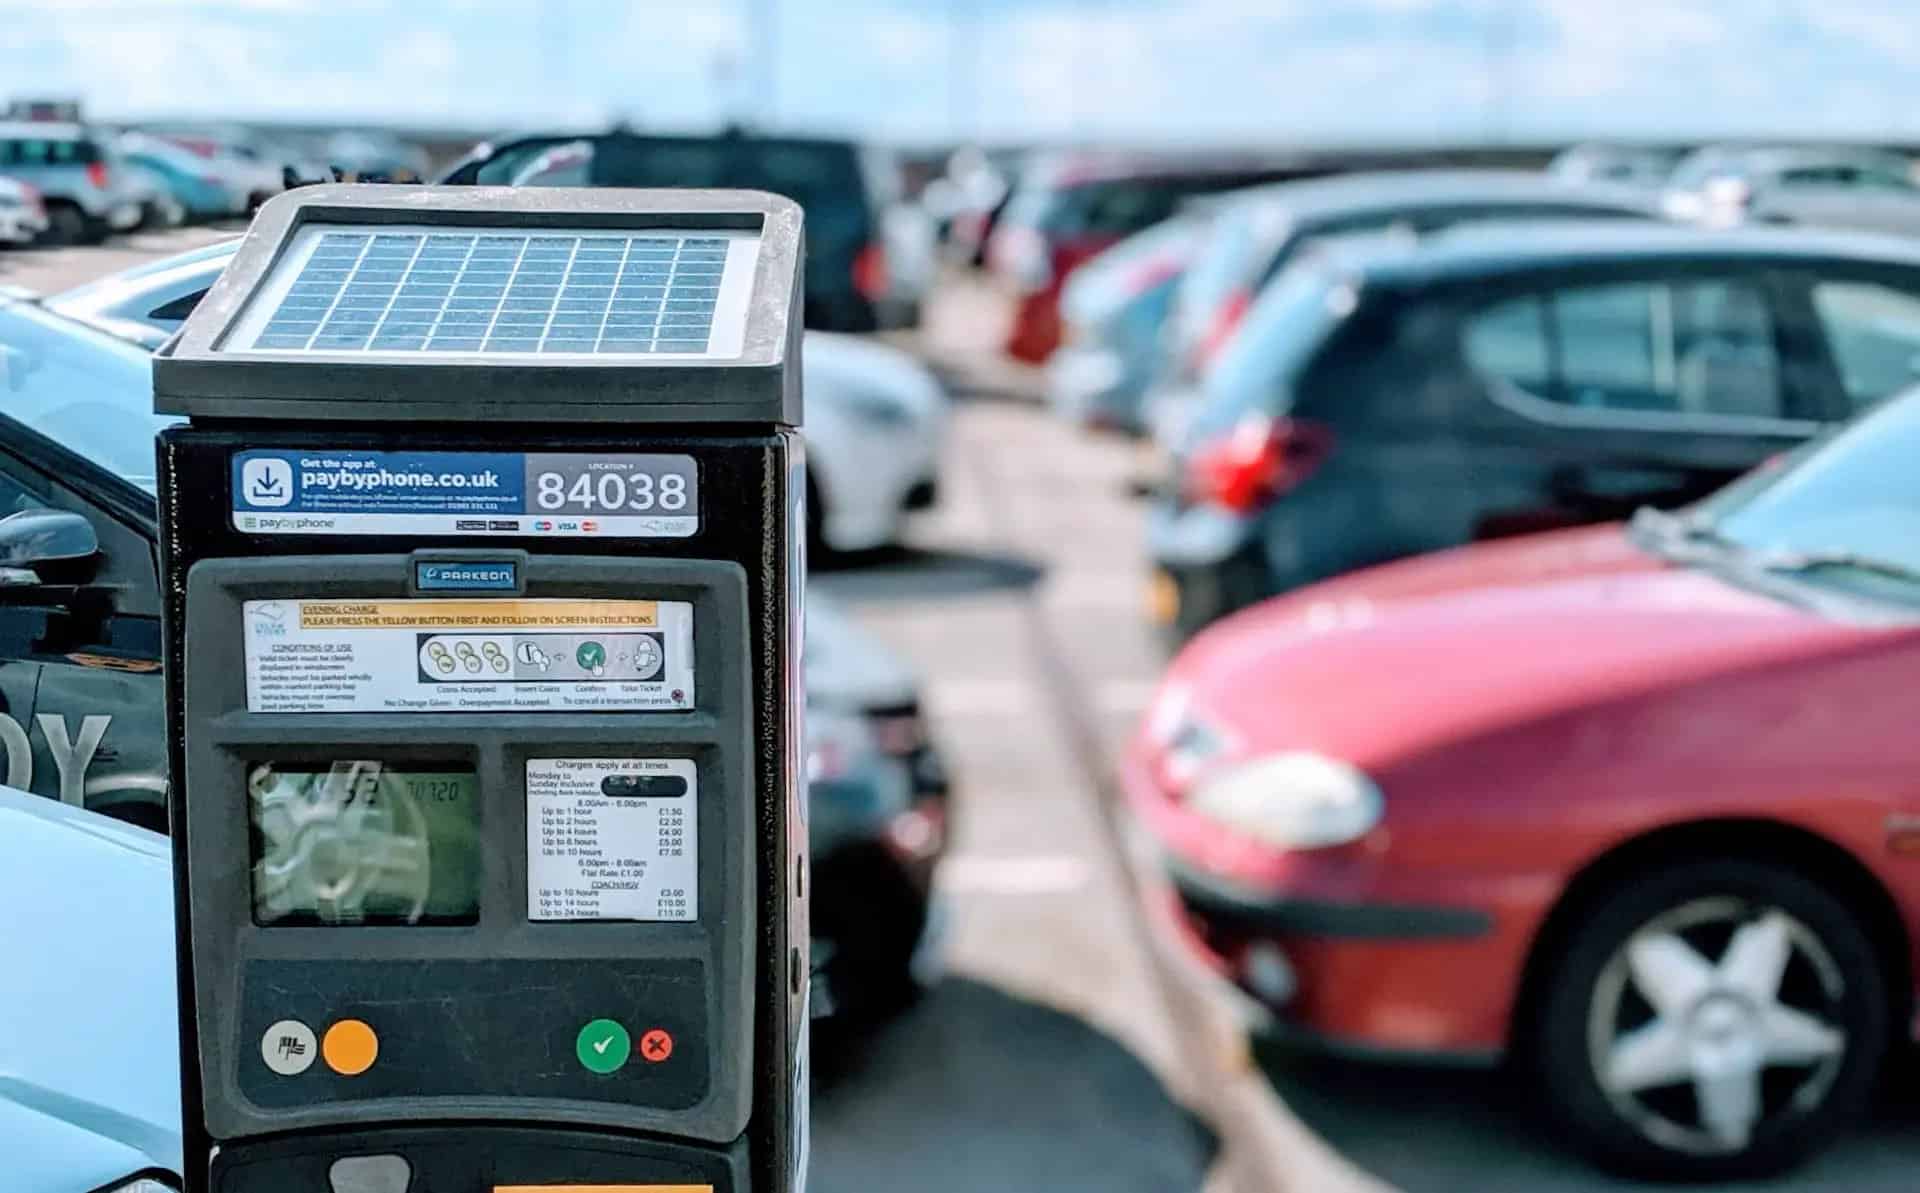 Parking meter in IWC car park